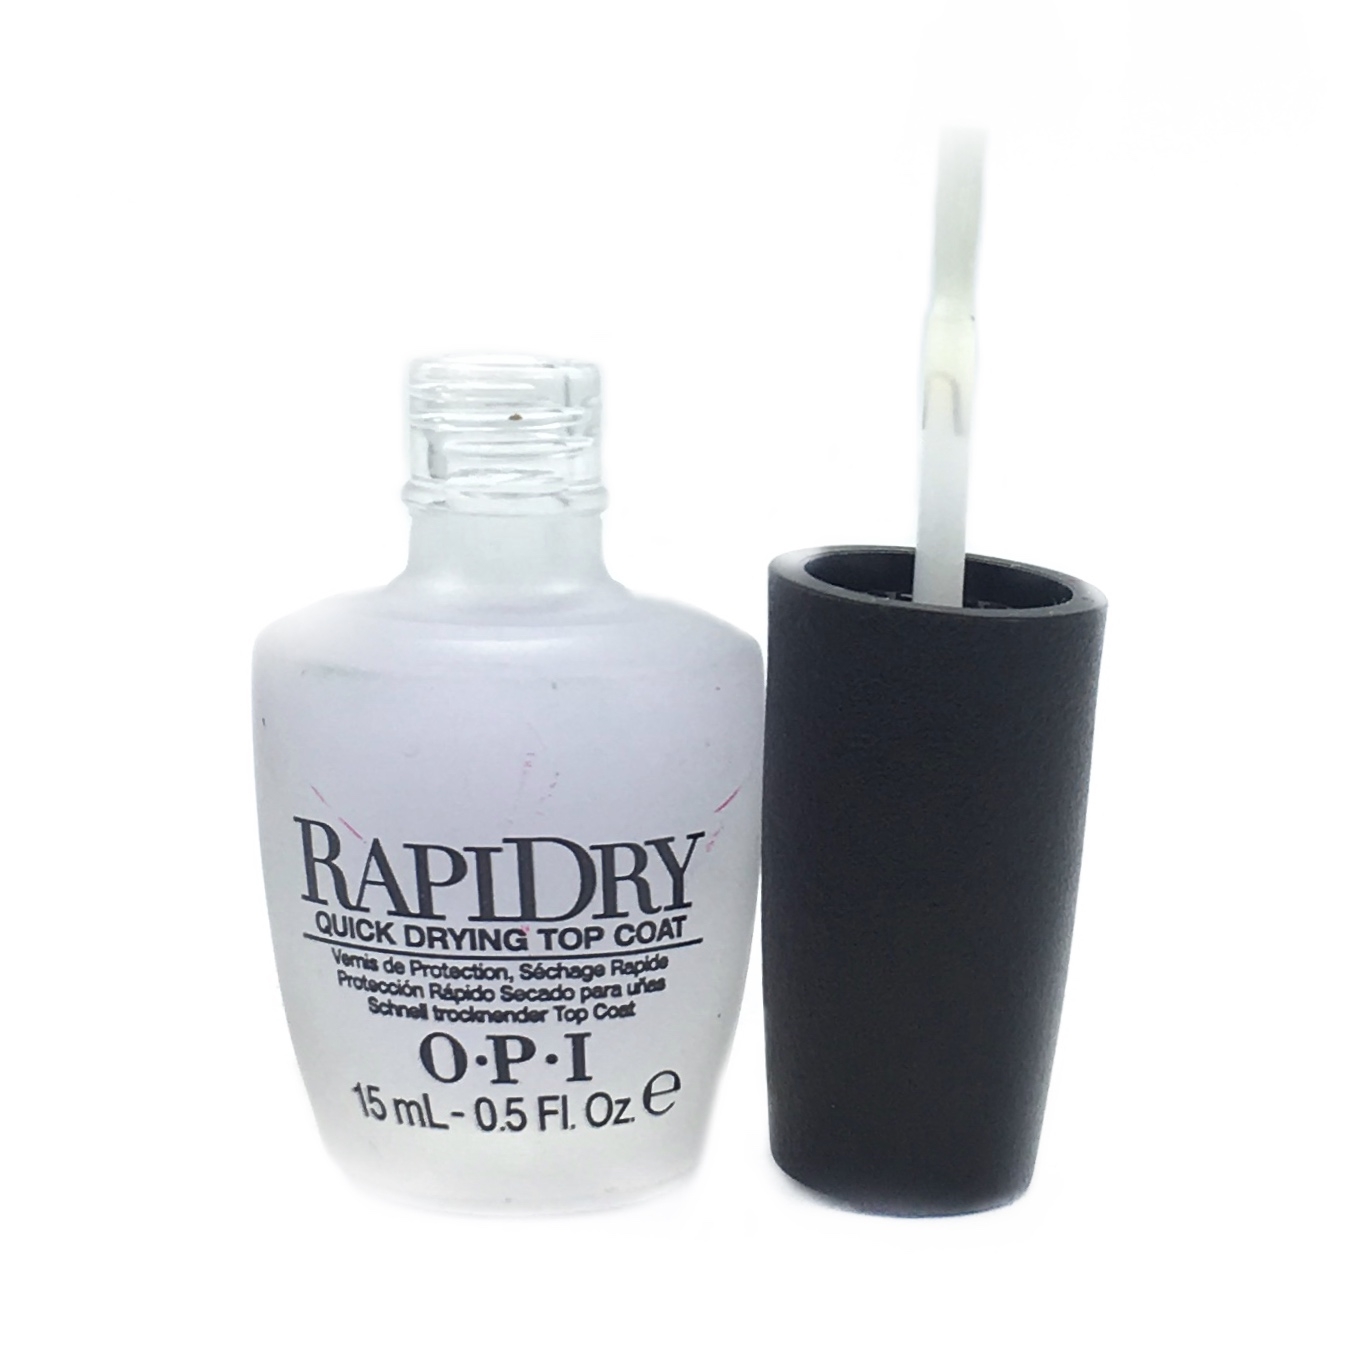 OPI Rapidry Top Coat Nail Polish